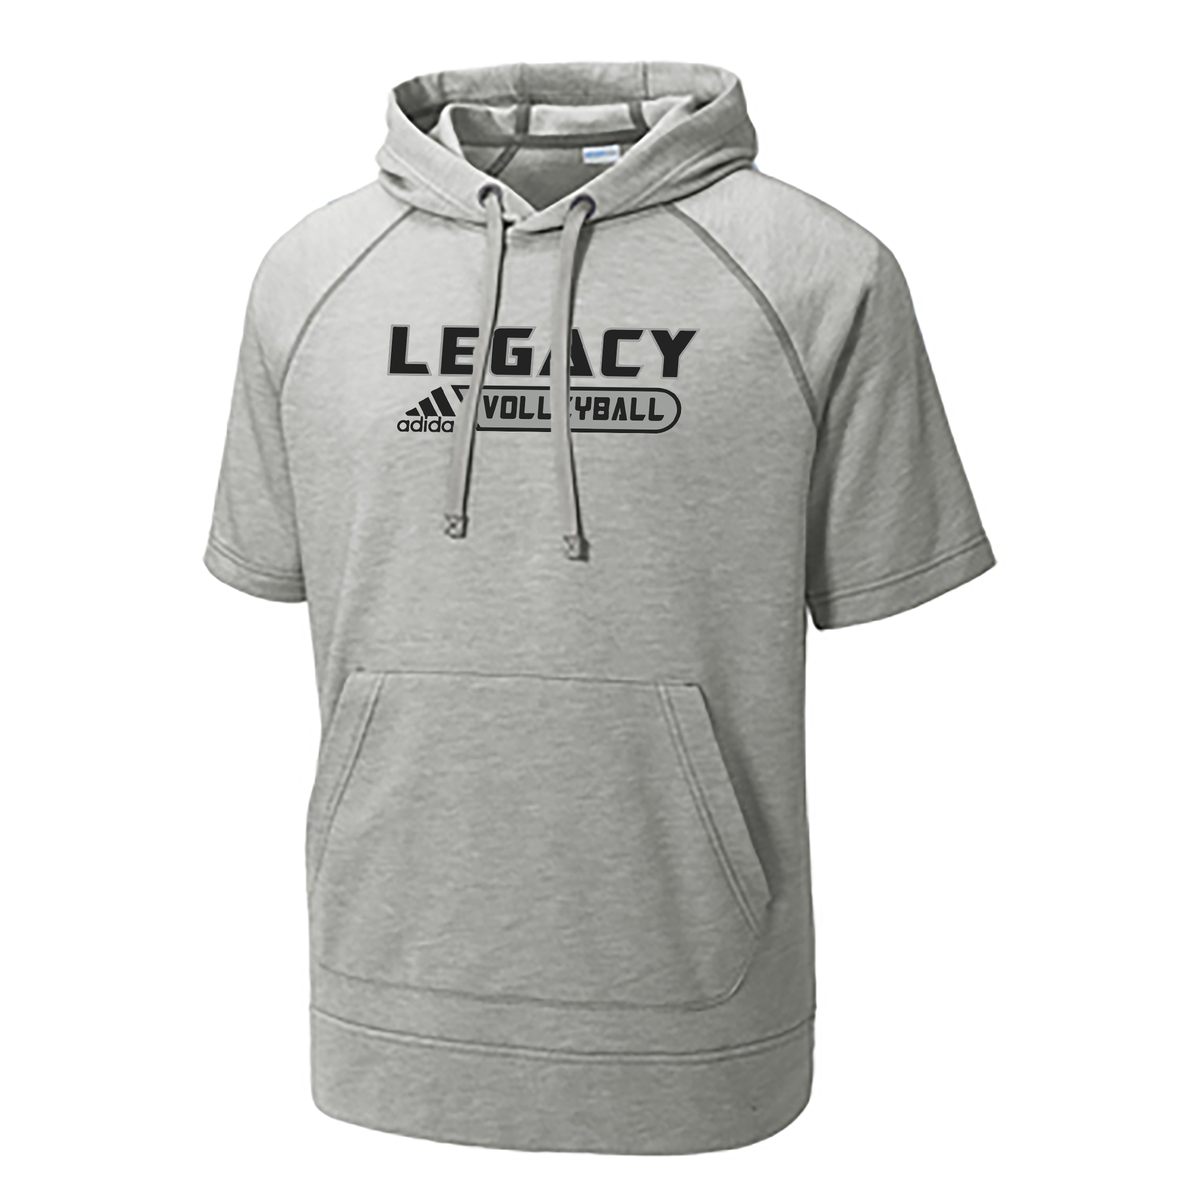 Legacy Volleyball Club Tri-Blend Short Sleeve Hoodie